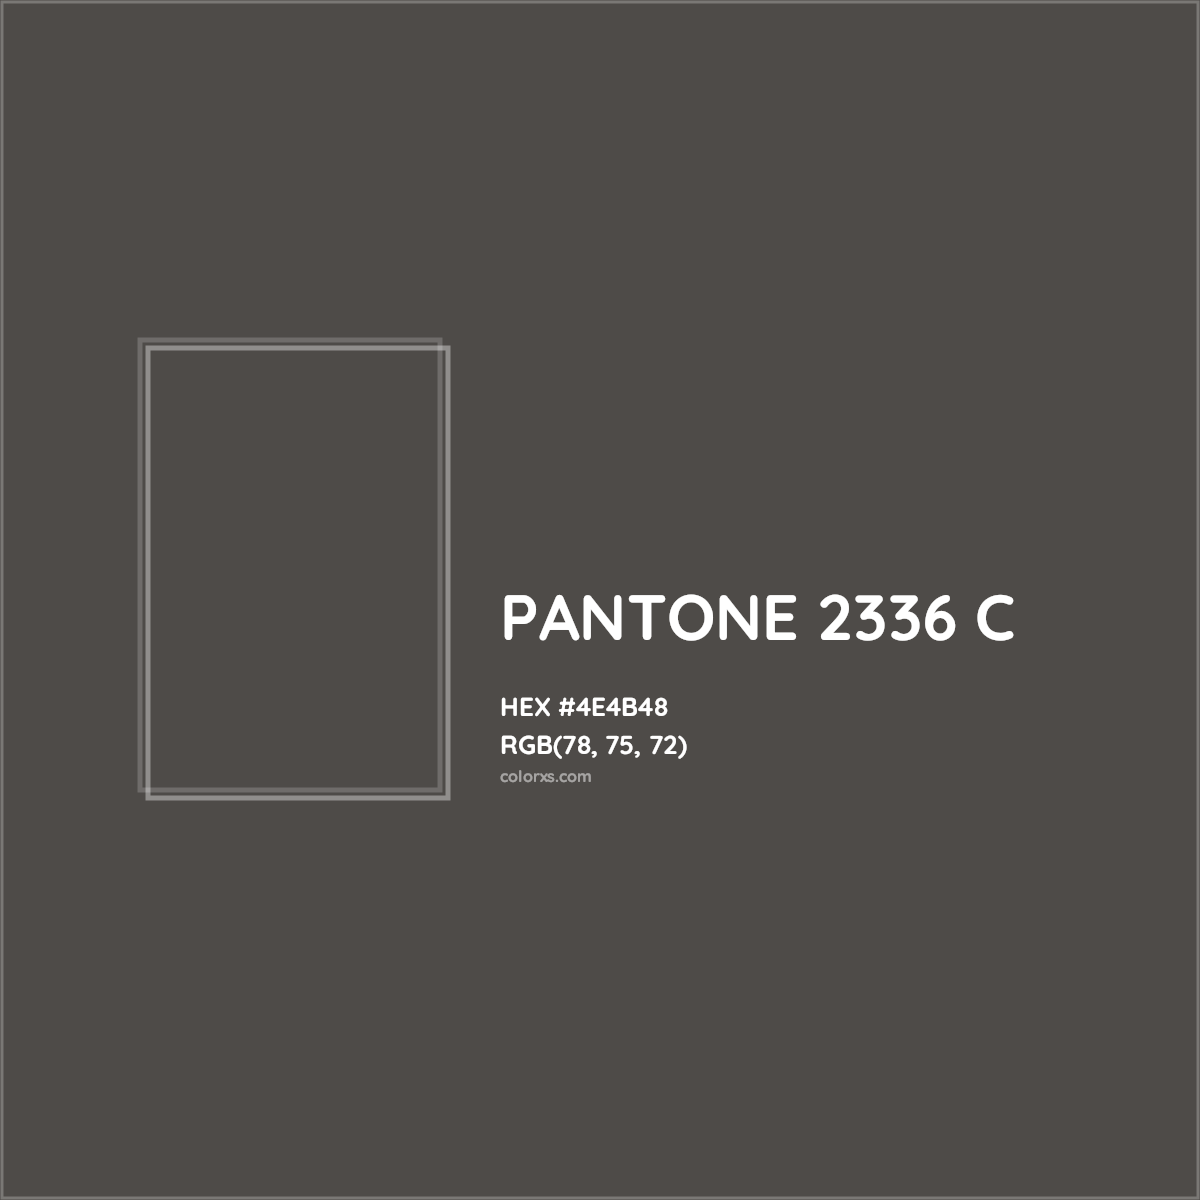 HEX #4E4B48 PANTONE 2336 C CMS Pantone PMS - Color Code